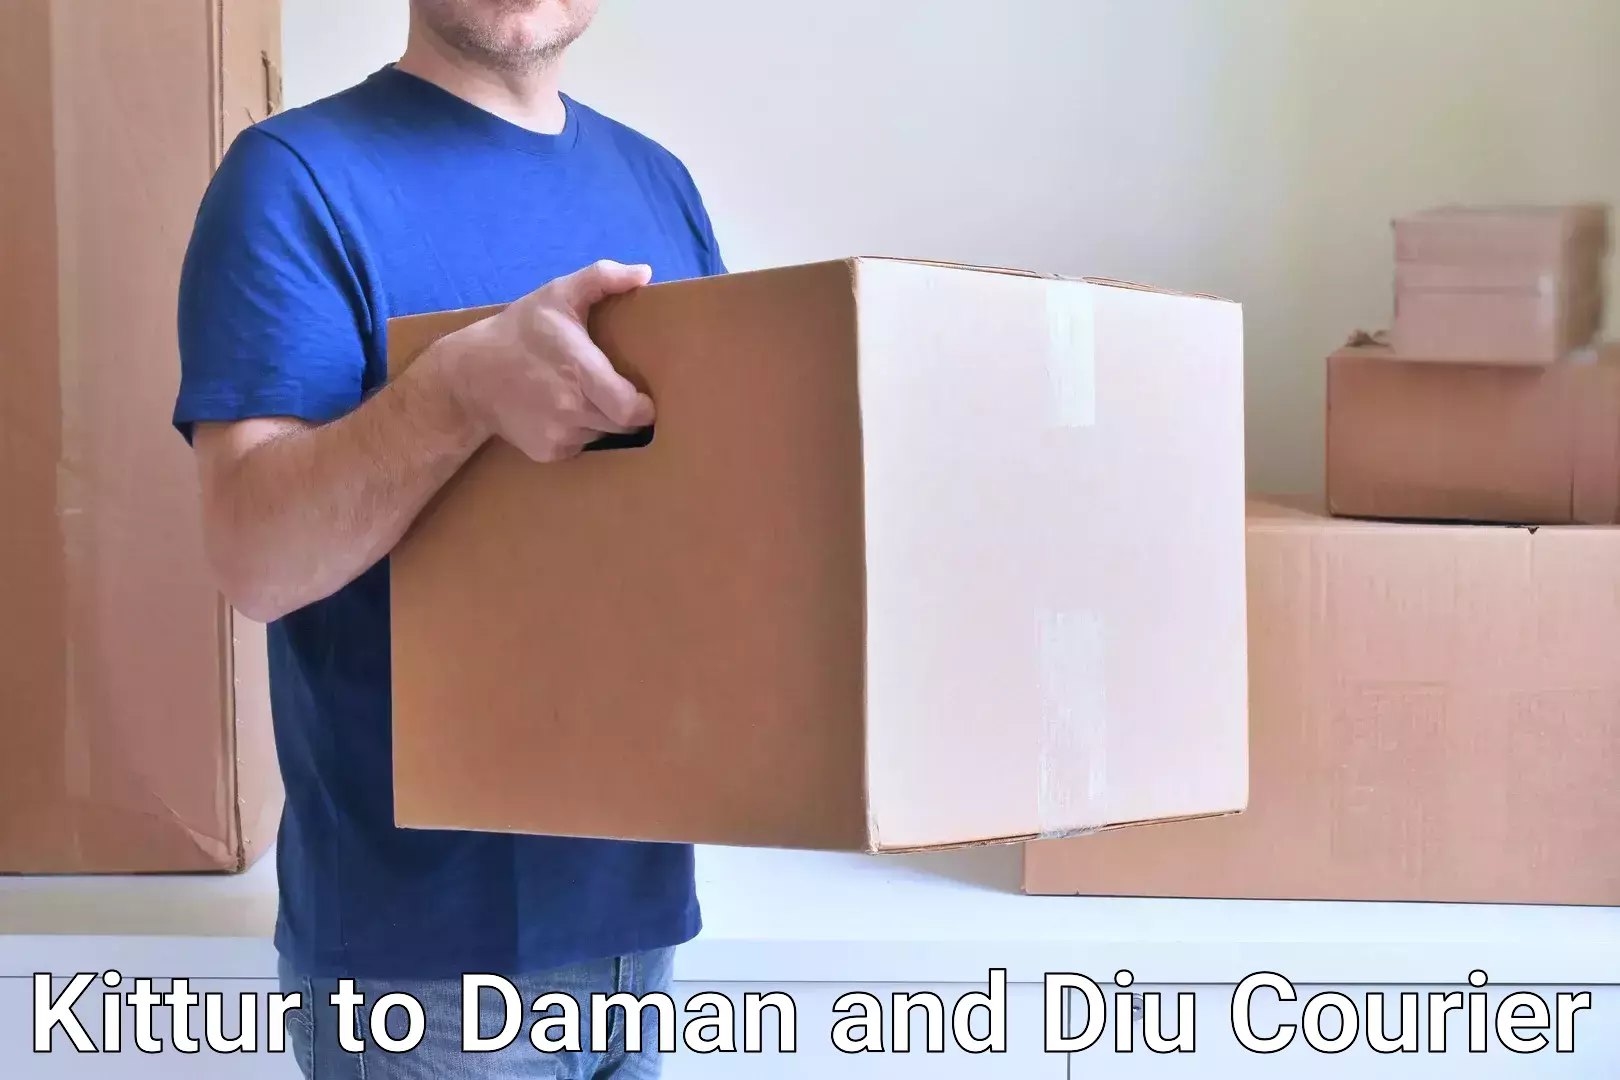 Efficient order fulfillment in Kittur to Daman and Diu